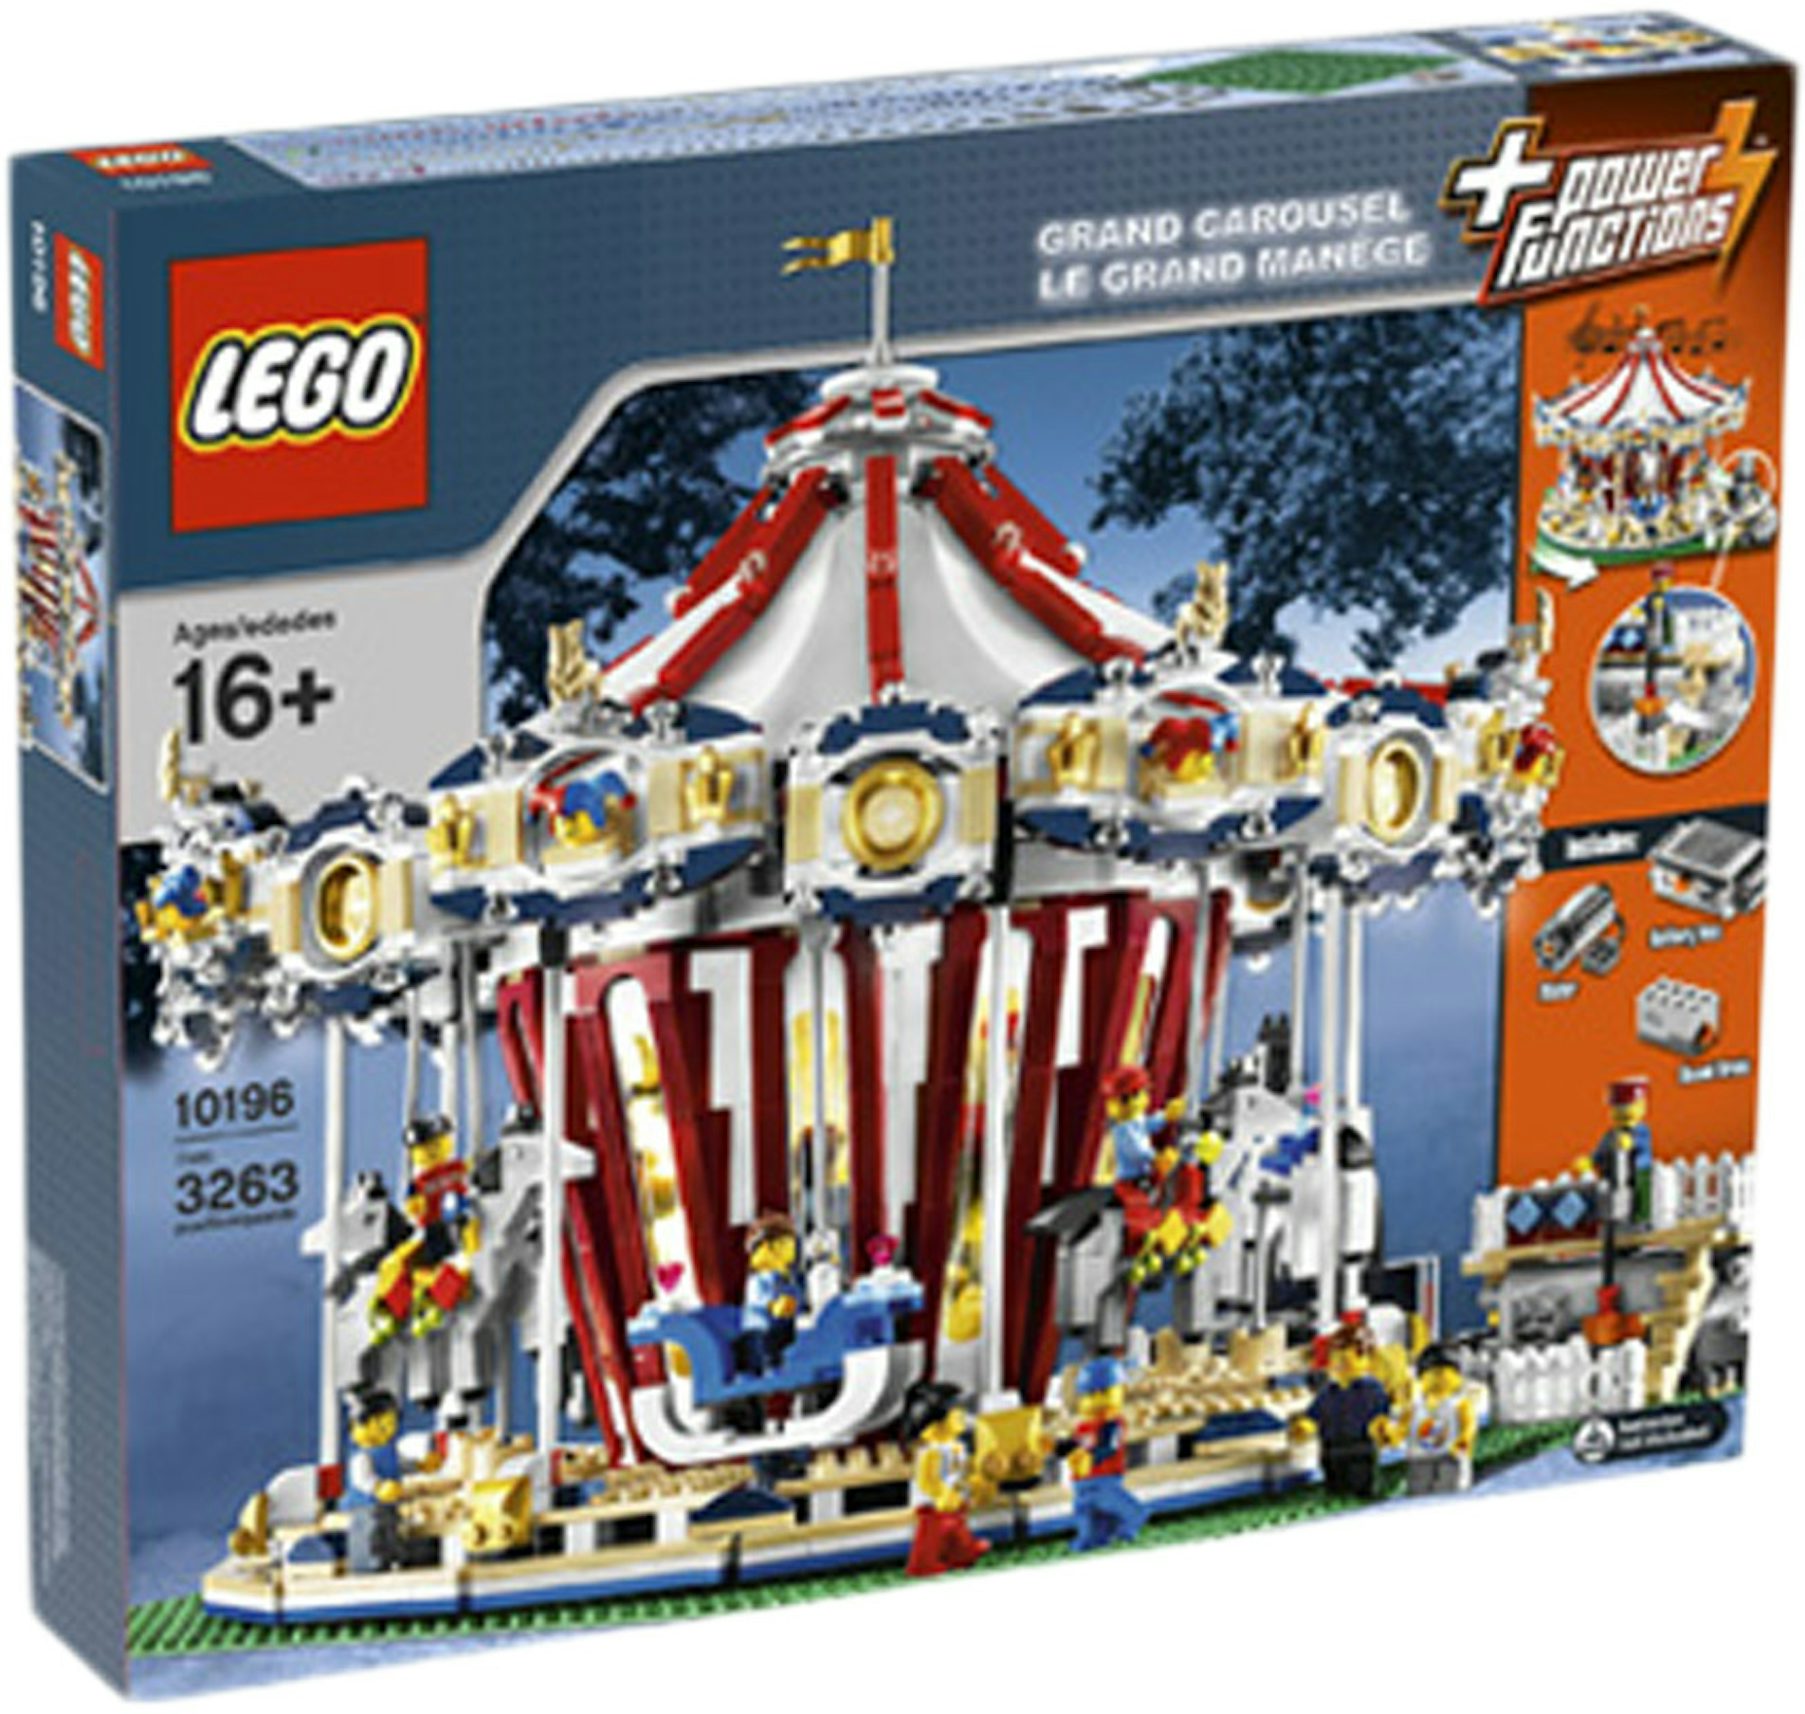 LEGO Creator Expert Grand Carousel Set 10196 - US